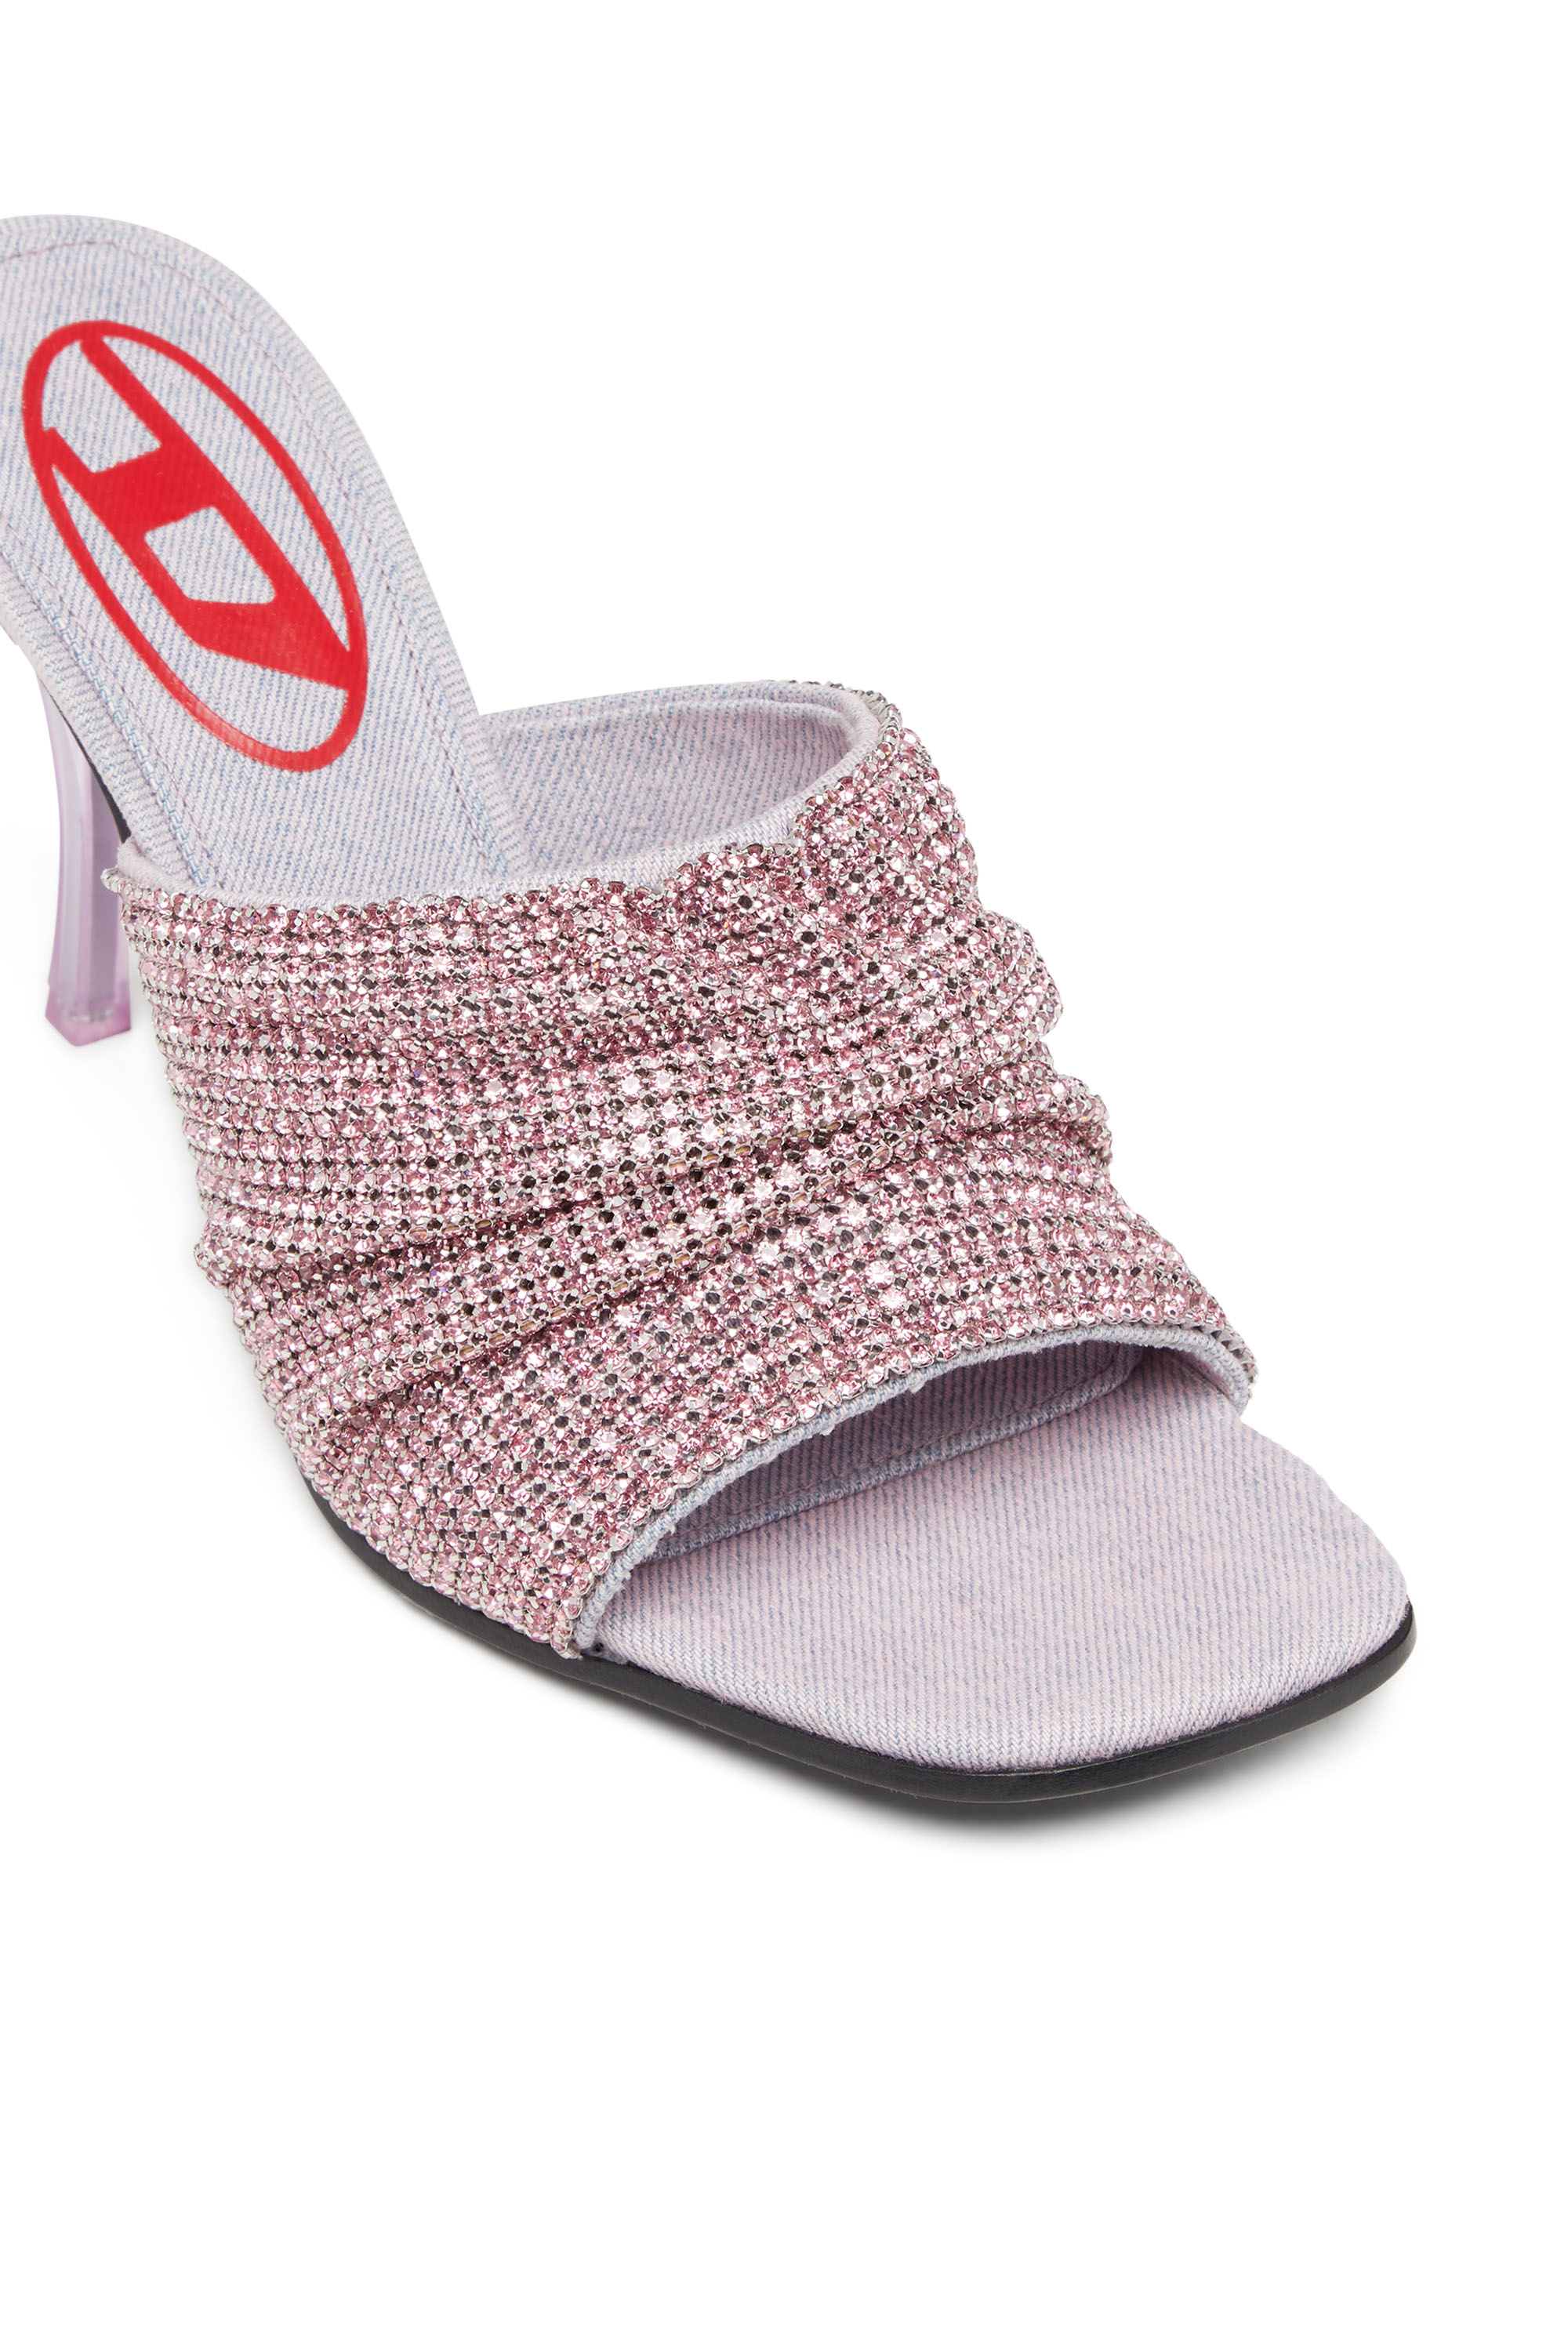 Diesel - D-SYDNEY SDL S, Woman D-Sydney Sdl S Sandals - Mule sandals with rhinestone band in Pink - Image 6